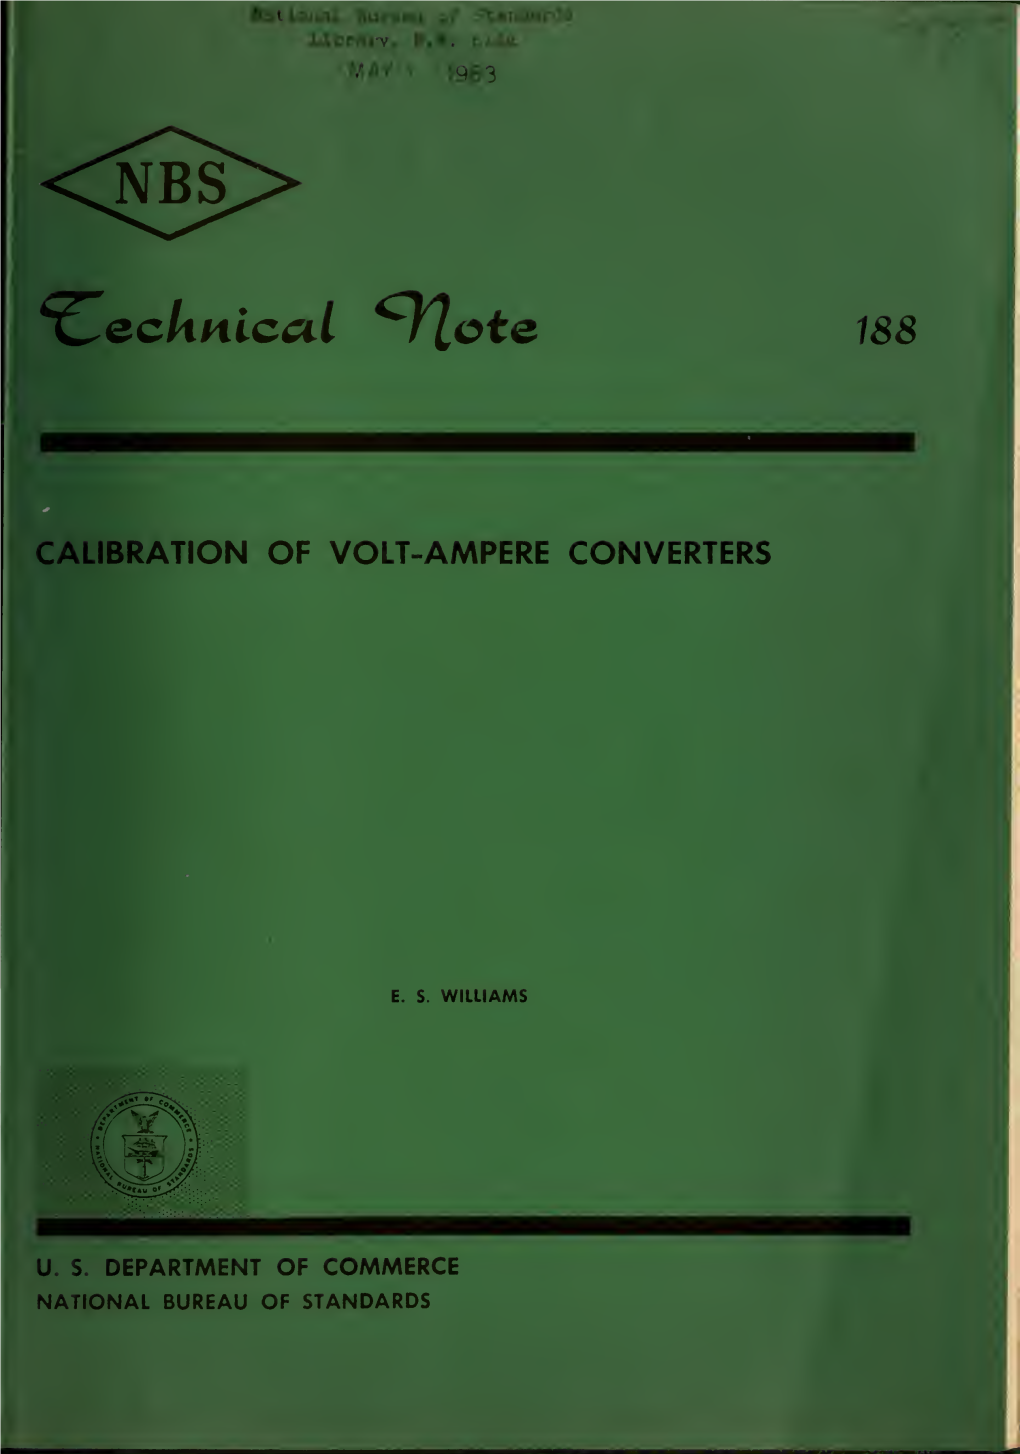 Calibration of Volt-Ampere Converters